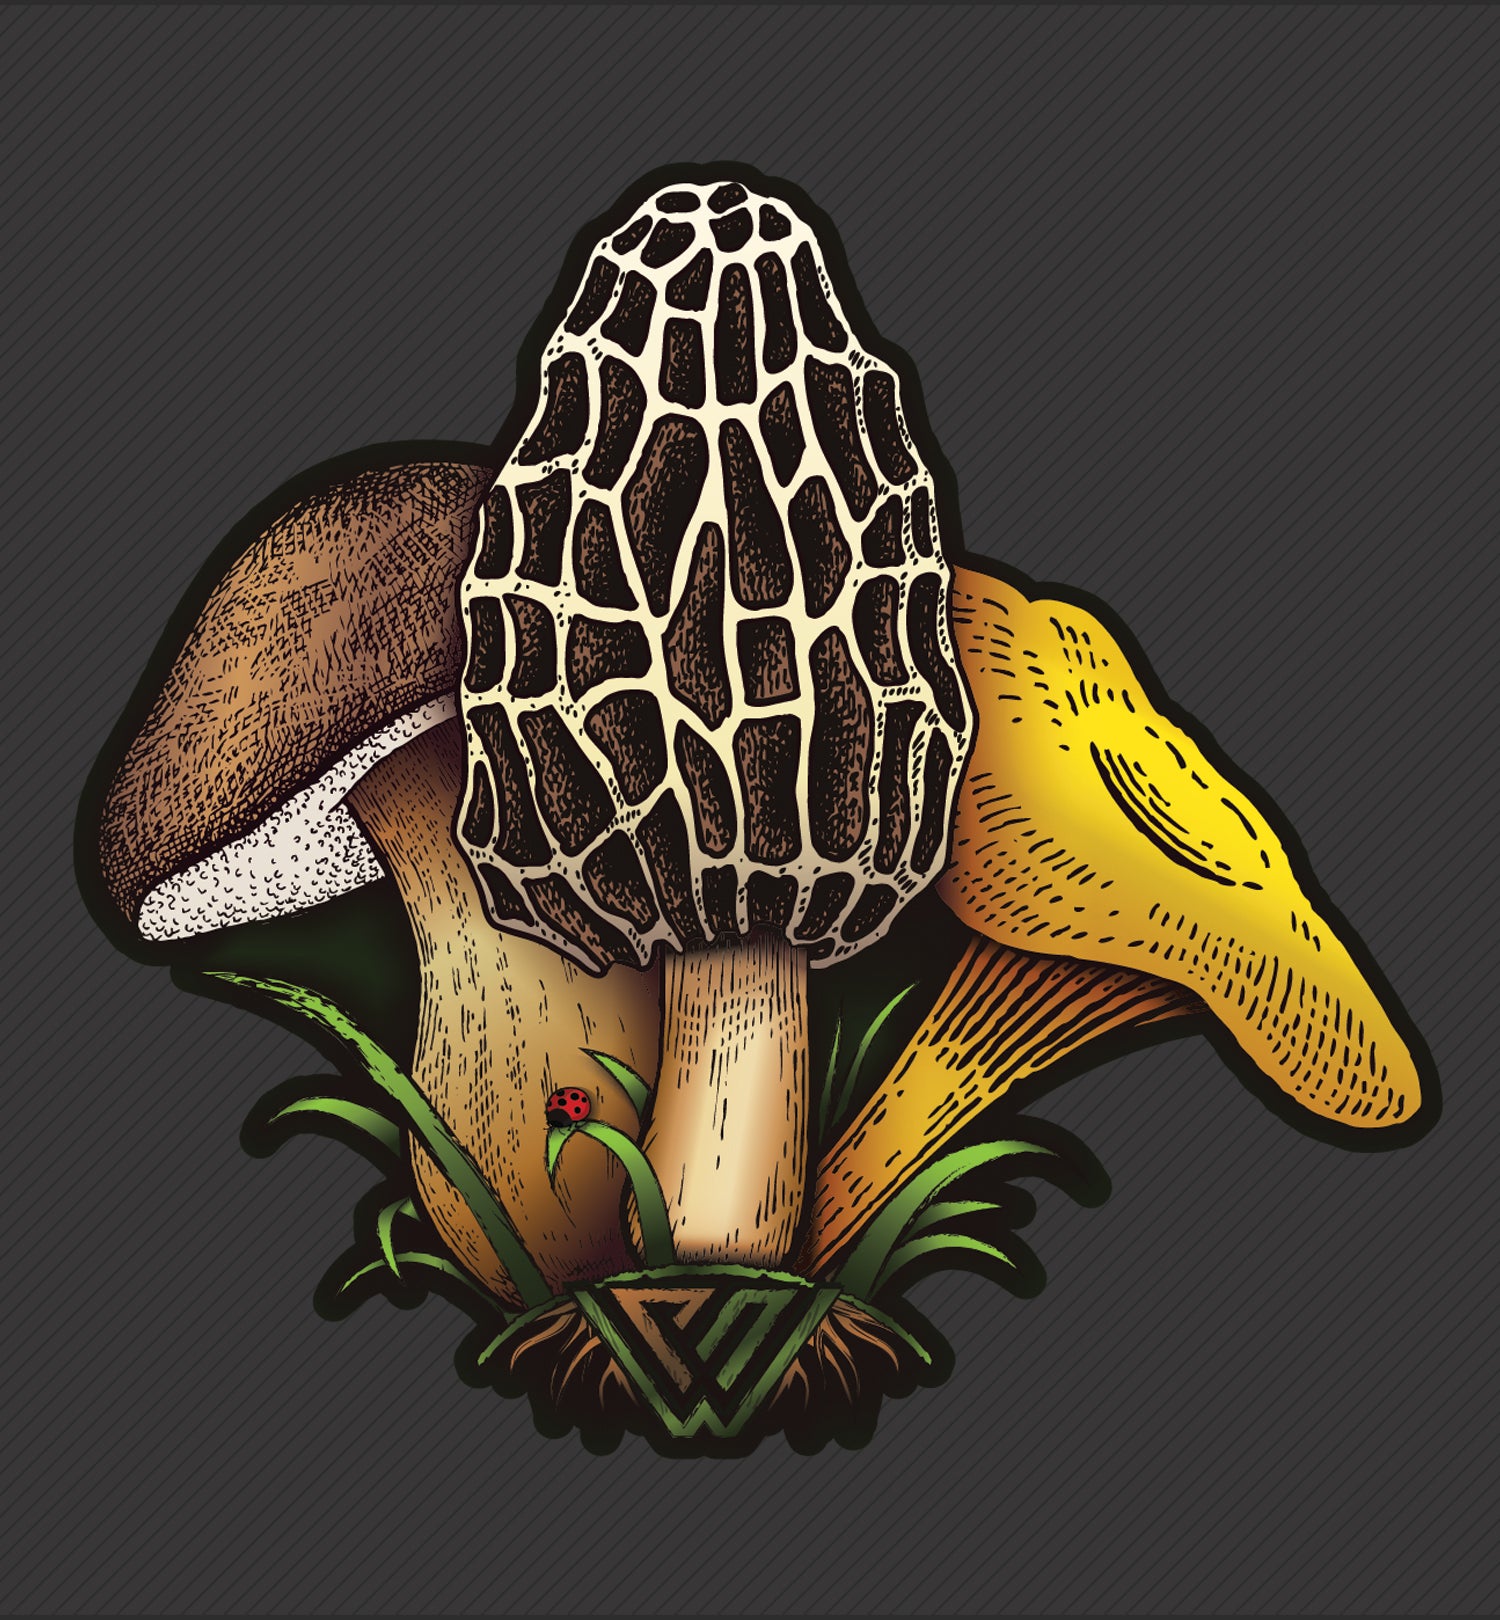 PNW Funguys mushroom sticker